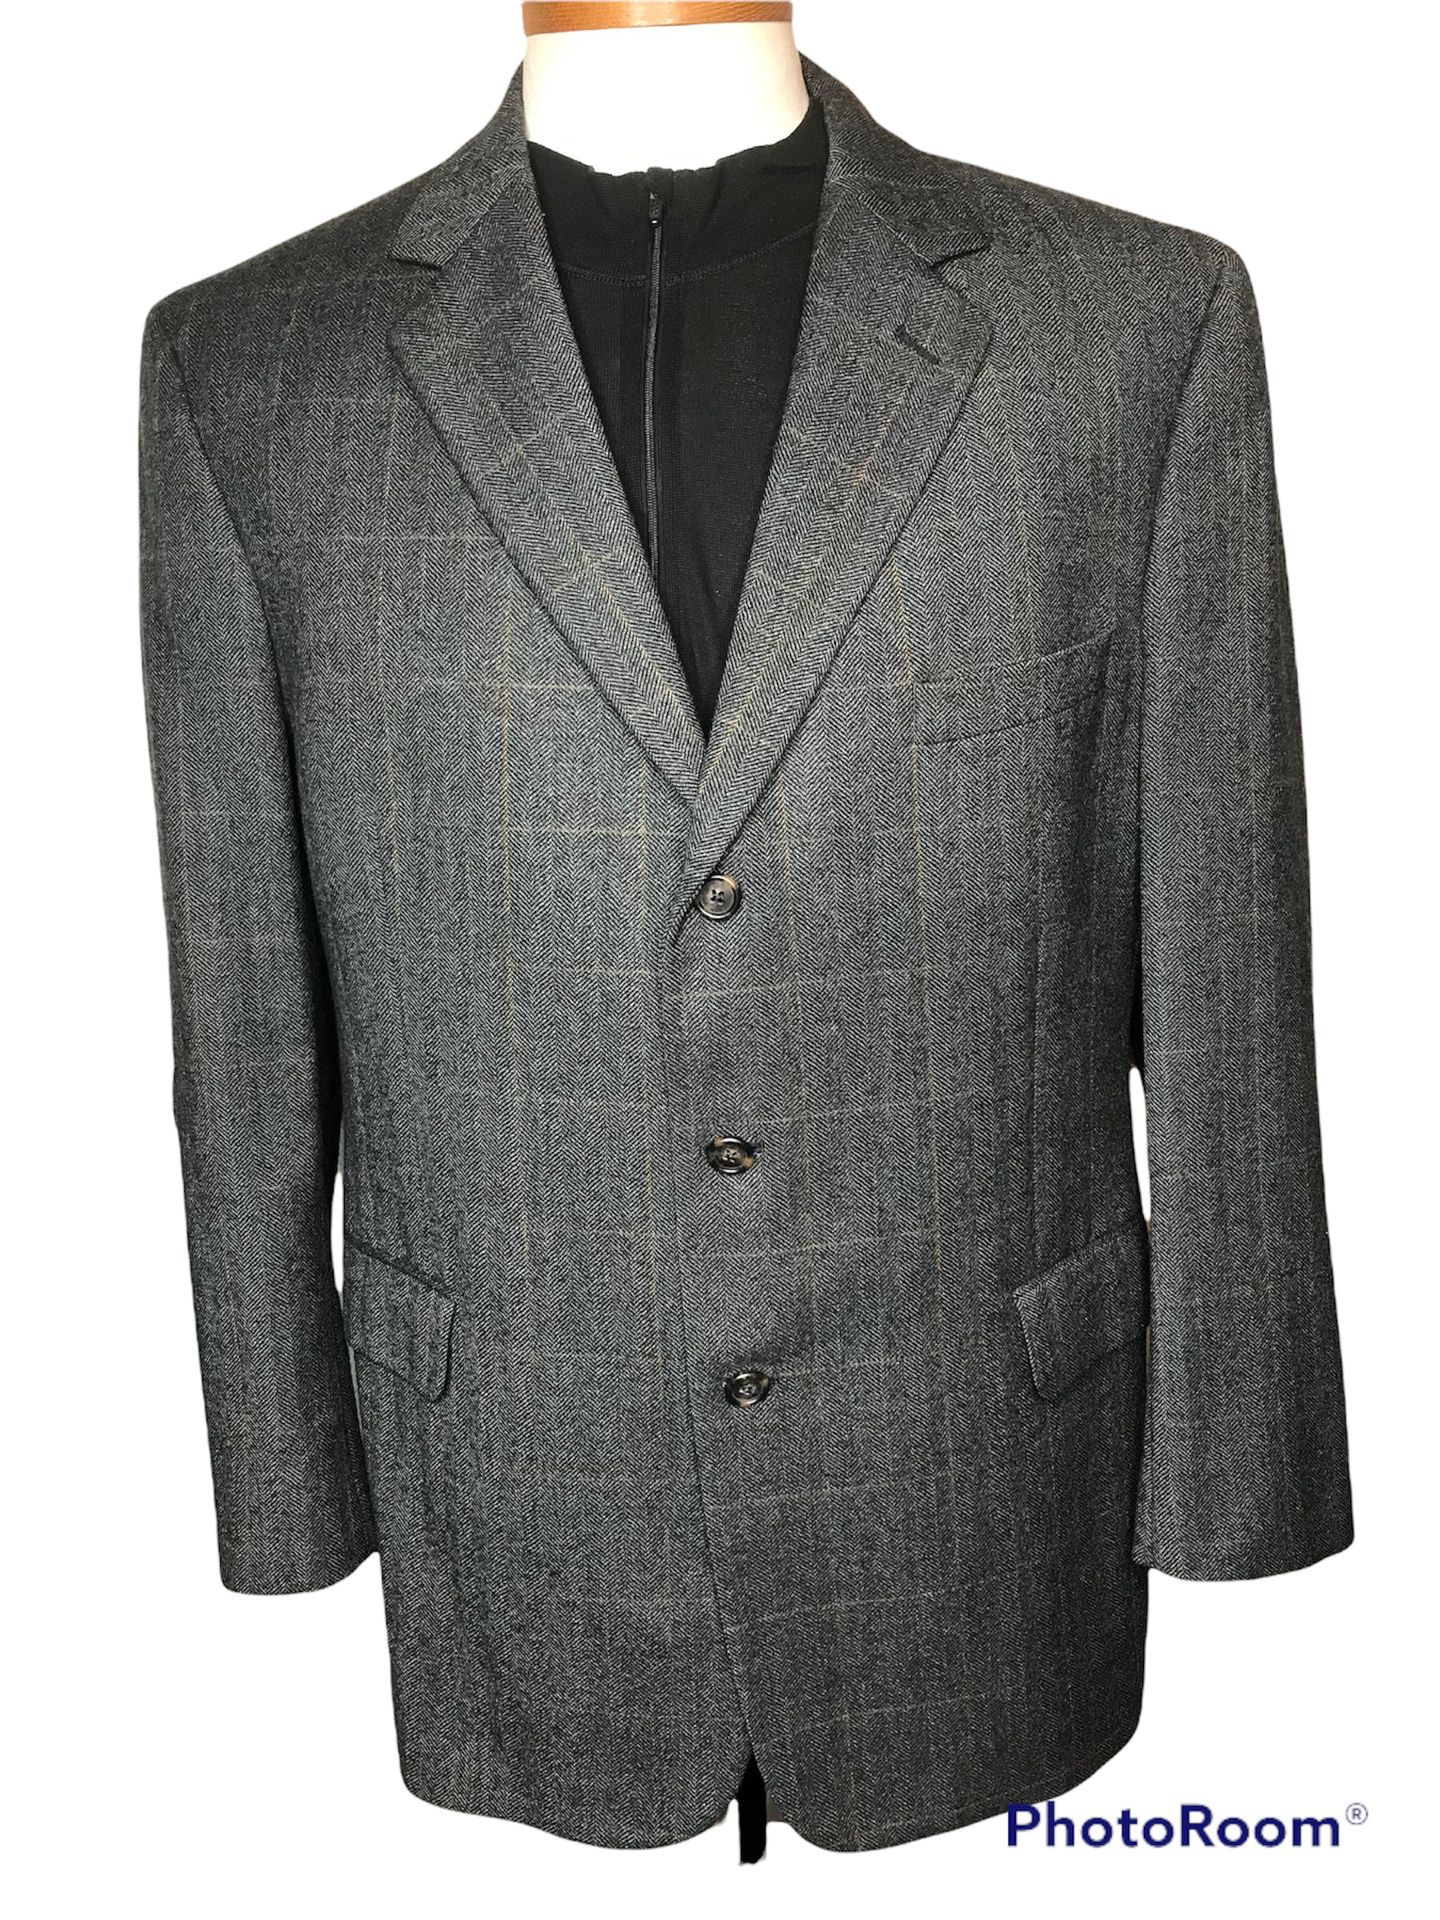 Jos A Bank Signature Men 44R Blazer 100% Wool Suit Jacket